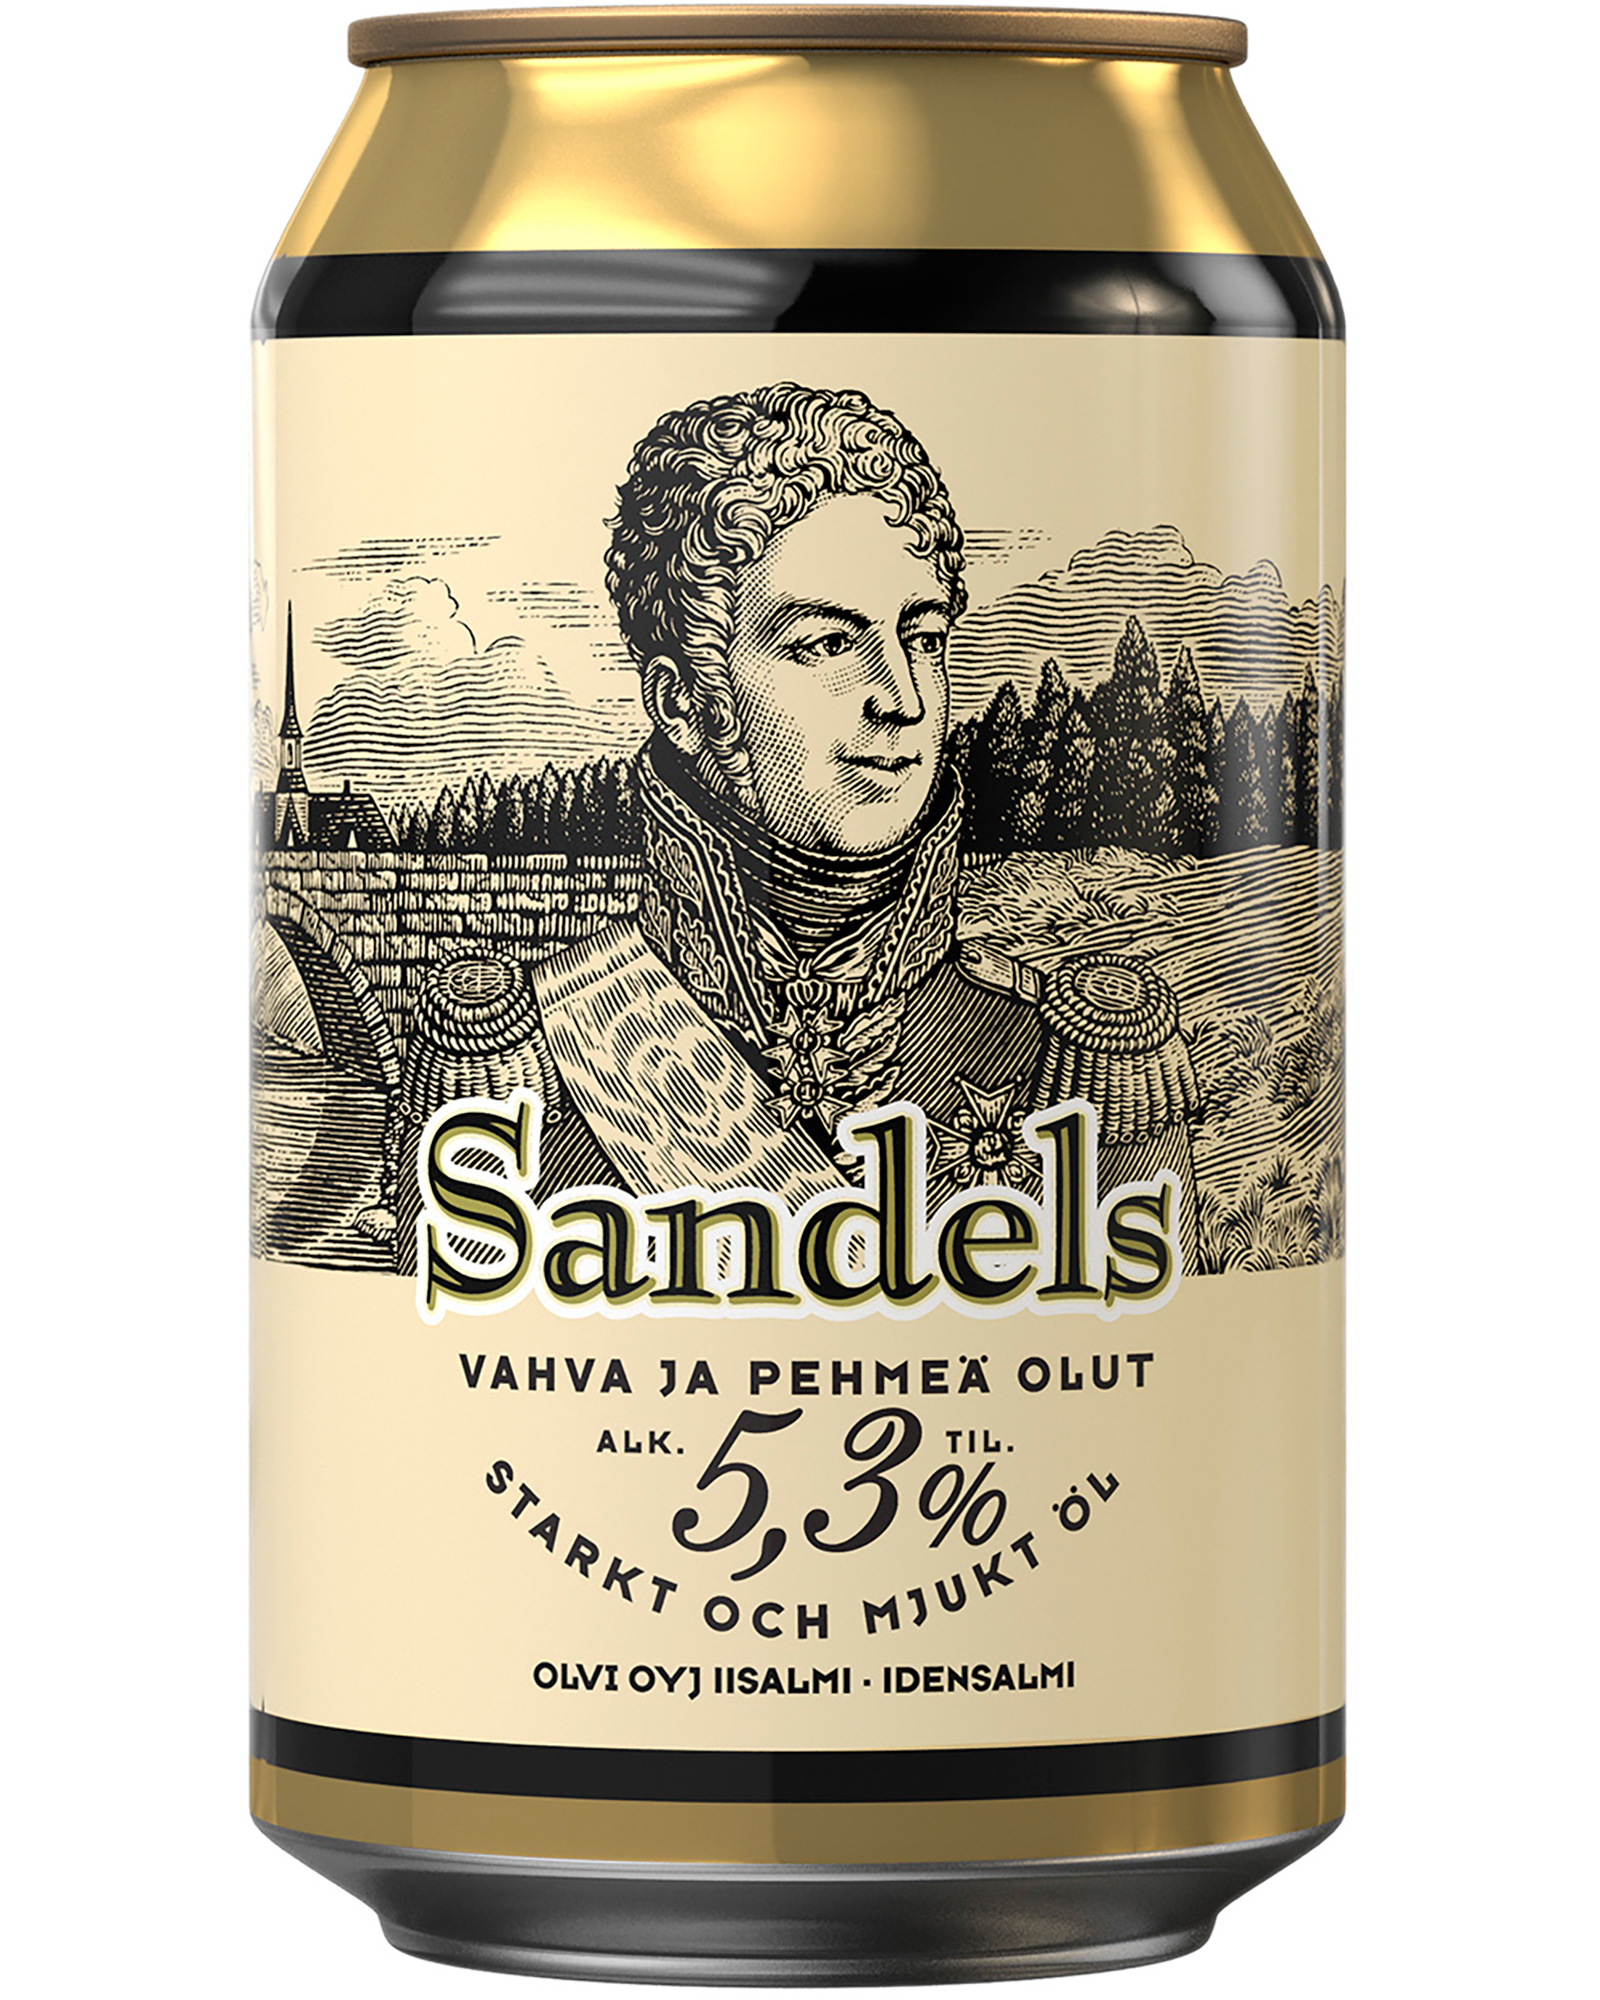 Sandels A can